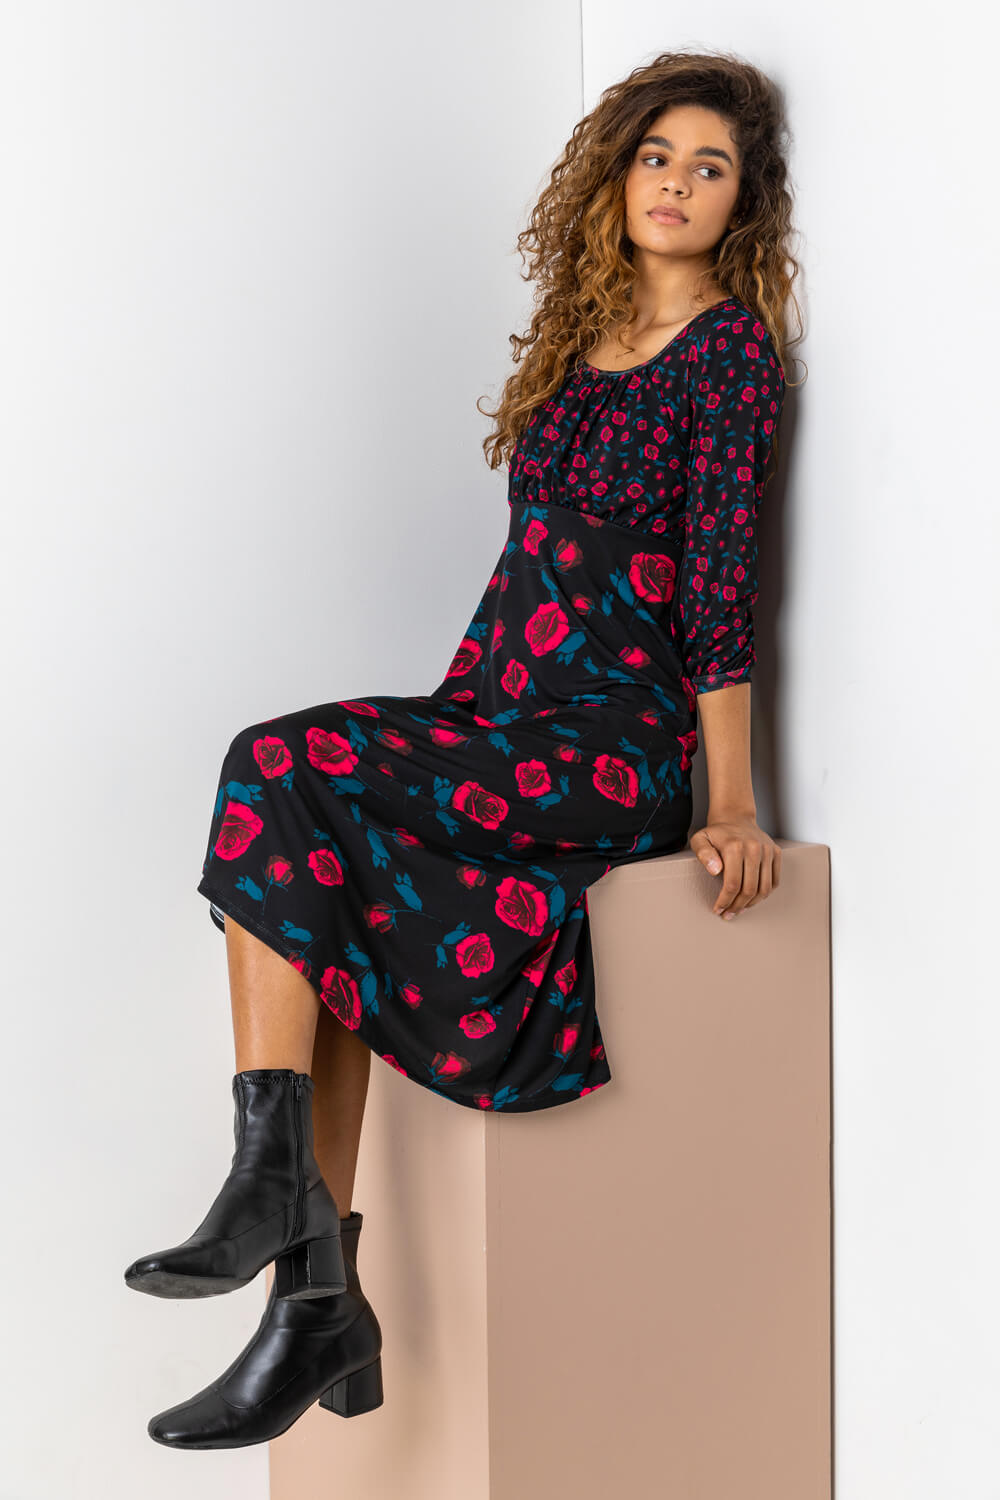 PINK Contrast Floral Print Midi Dress, Image 5 of 5